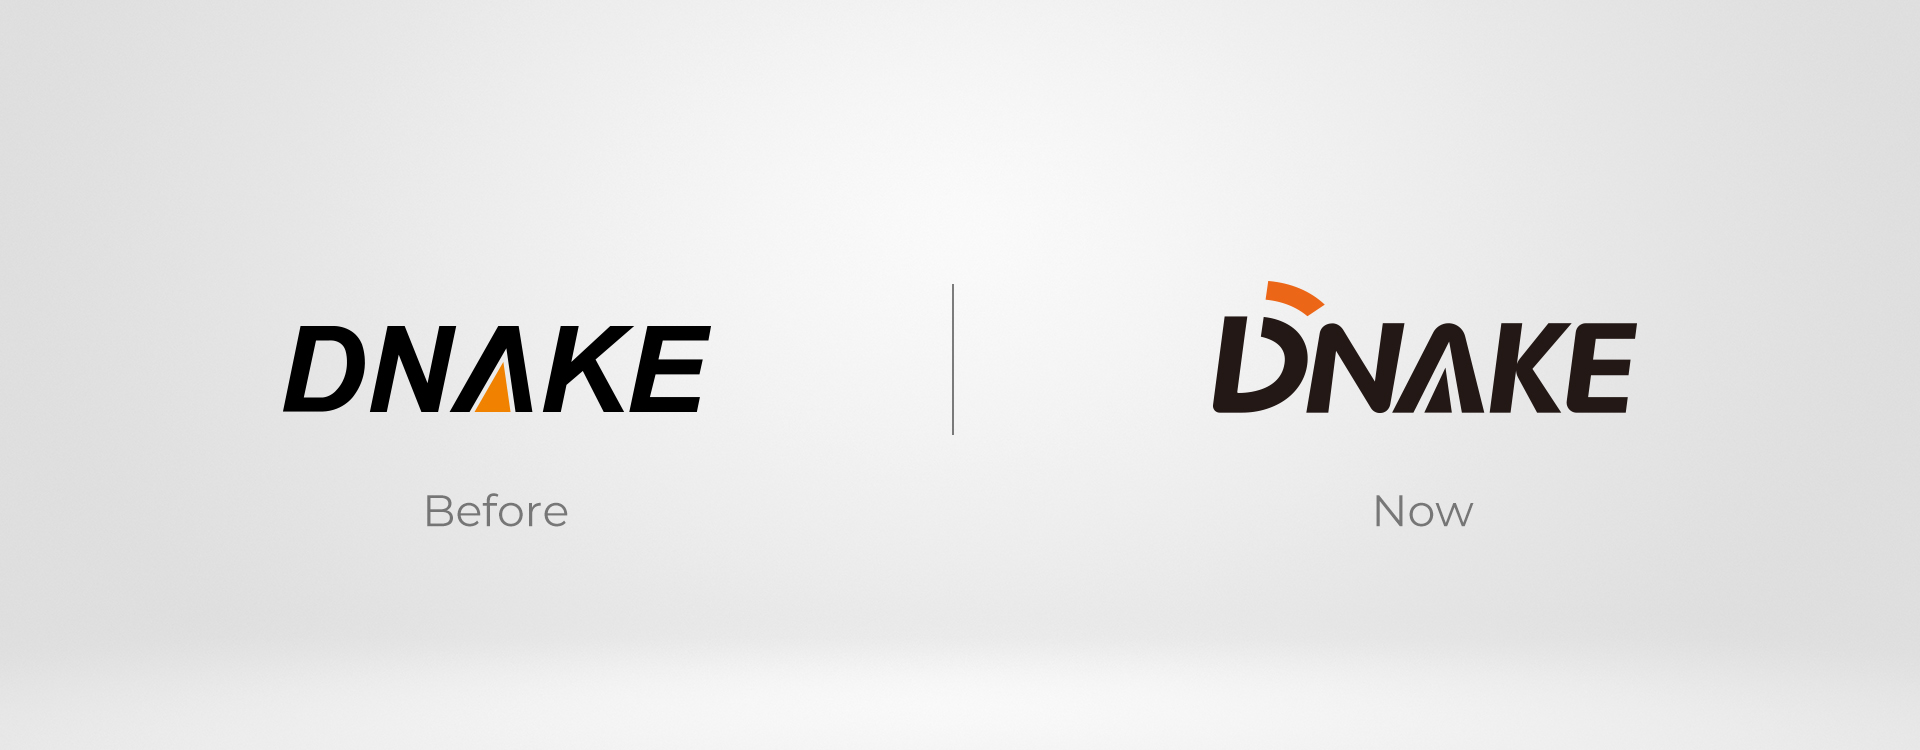 DNAKE പുതിയ ലോഗോ താരതമ്യം